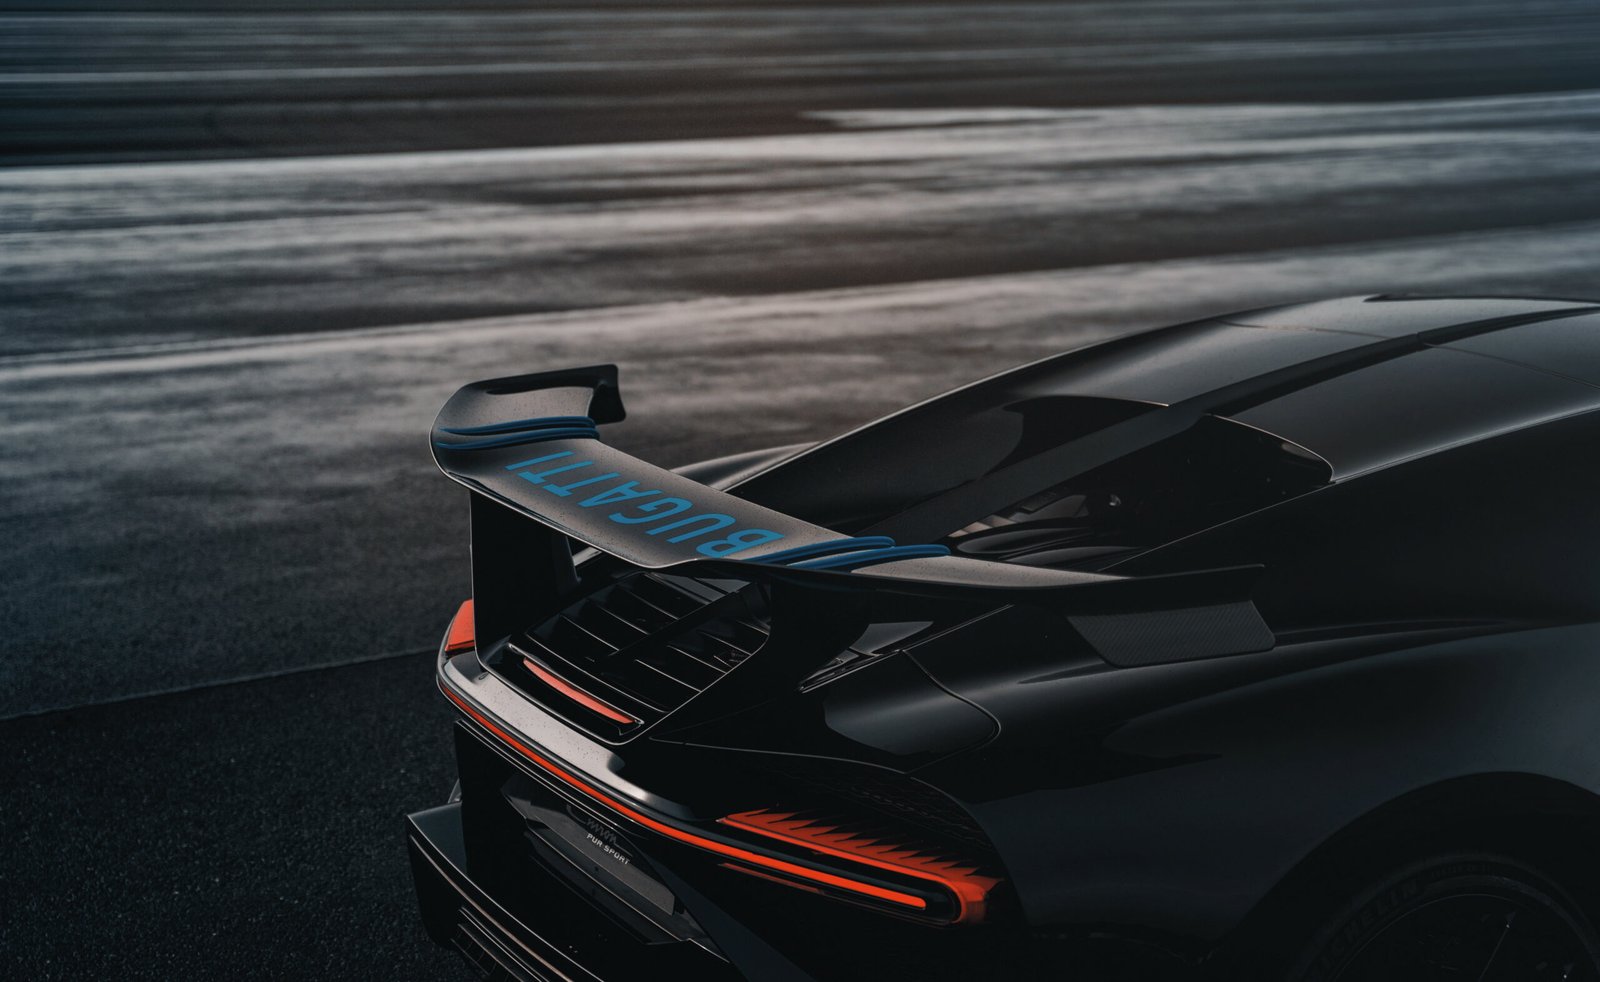 Bugatti Chiron Pur Sport – ‘Drifting The C’